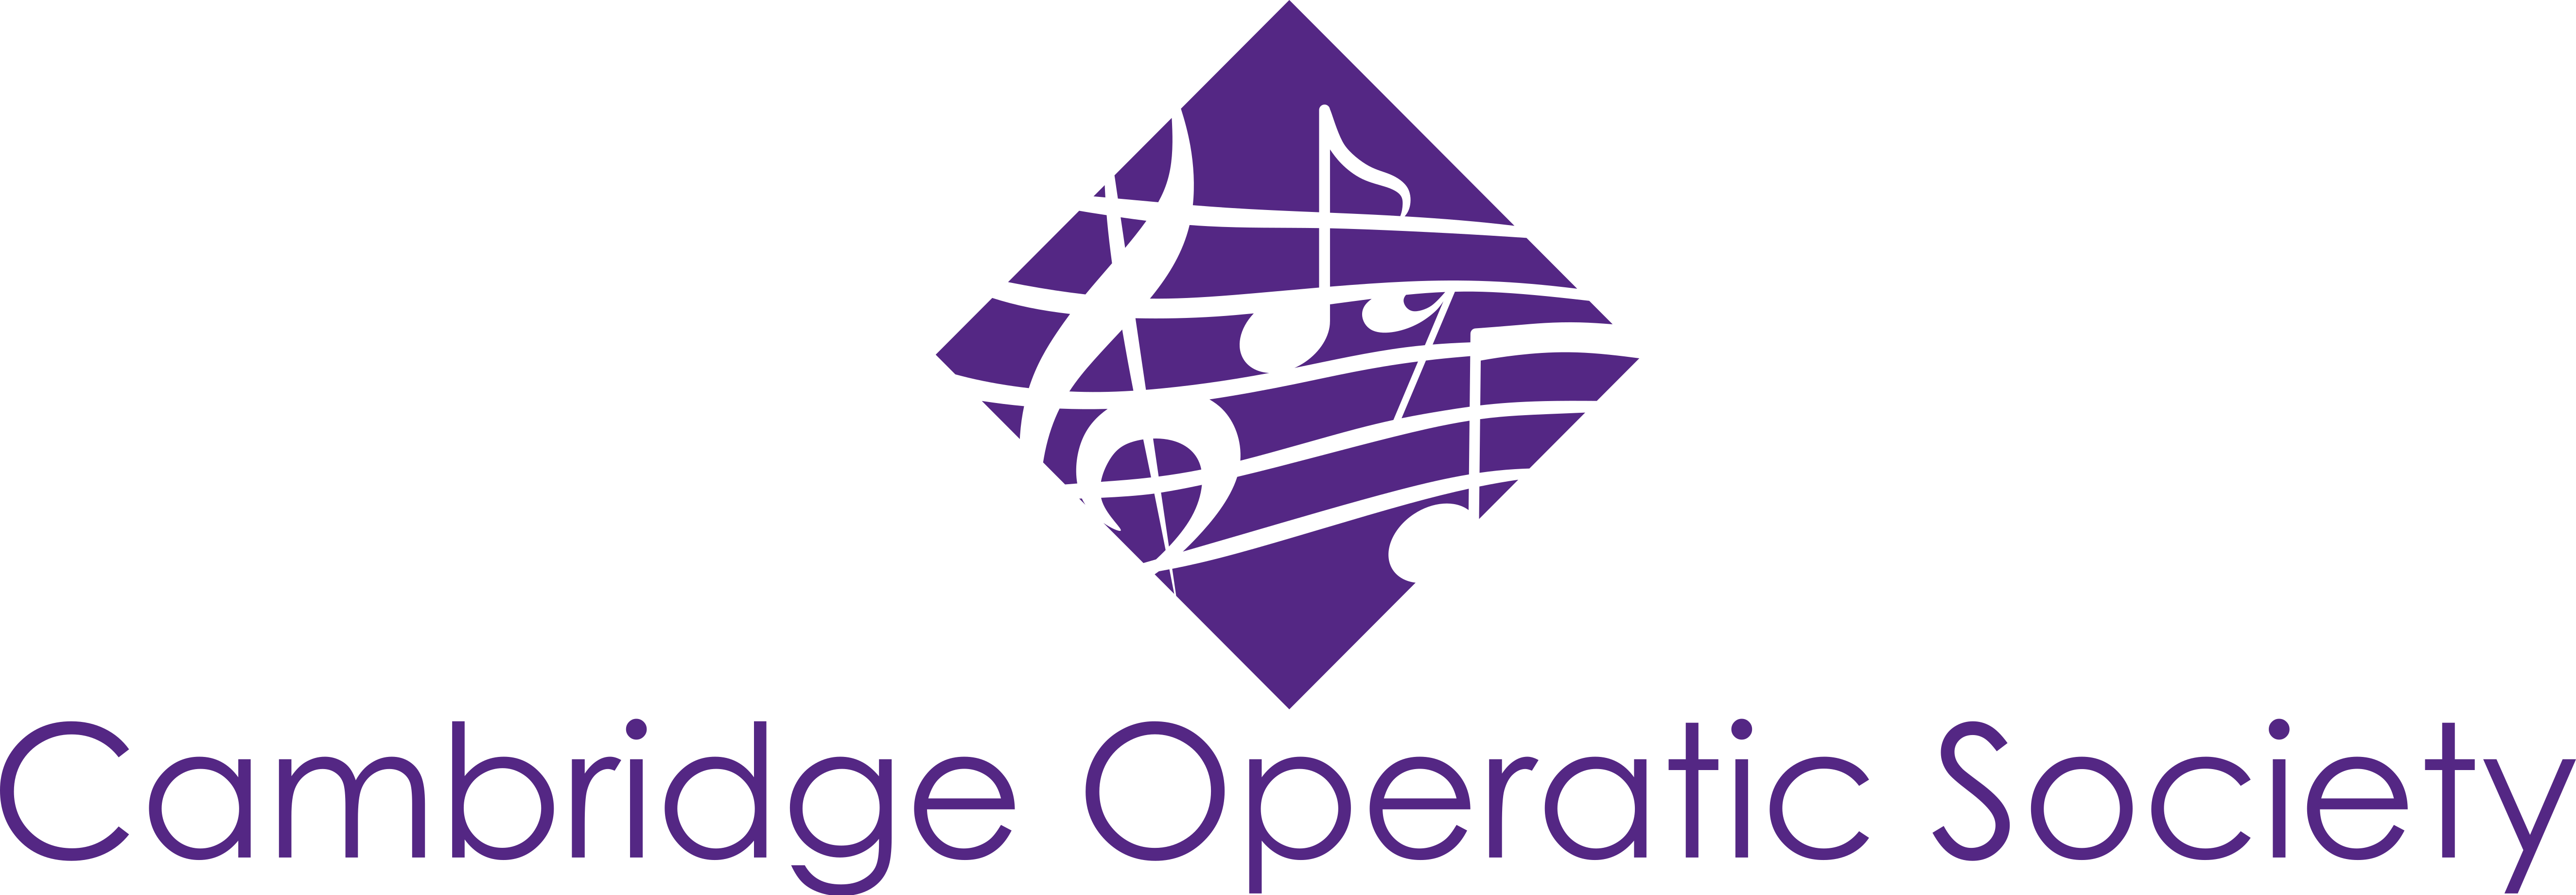 Cambridge Operatic Society